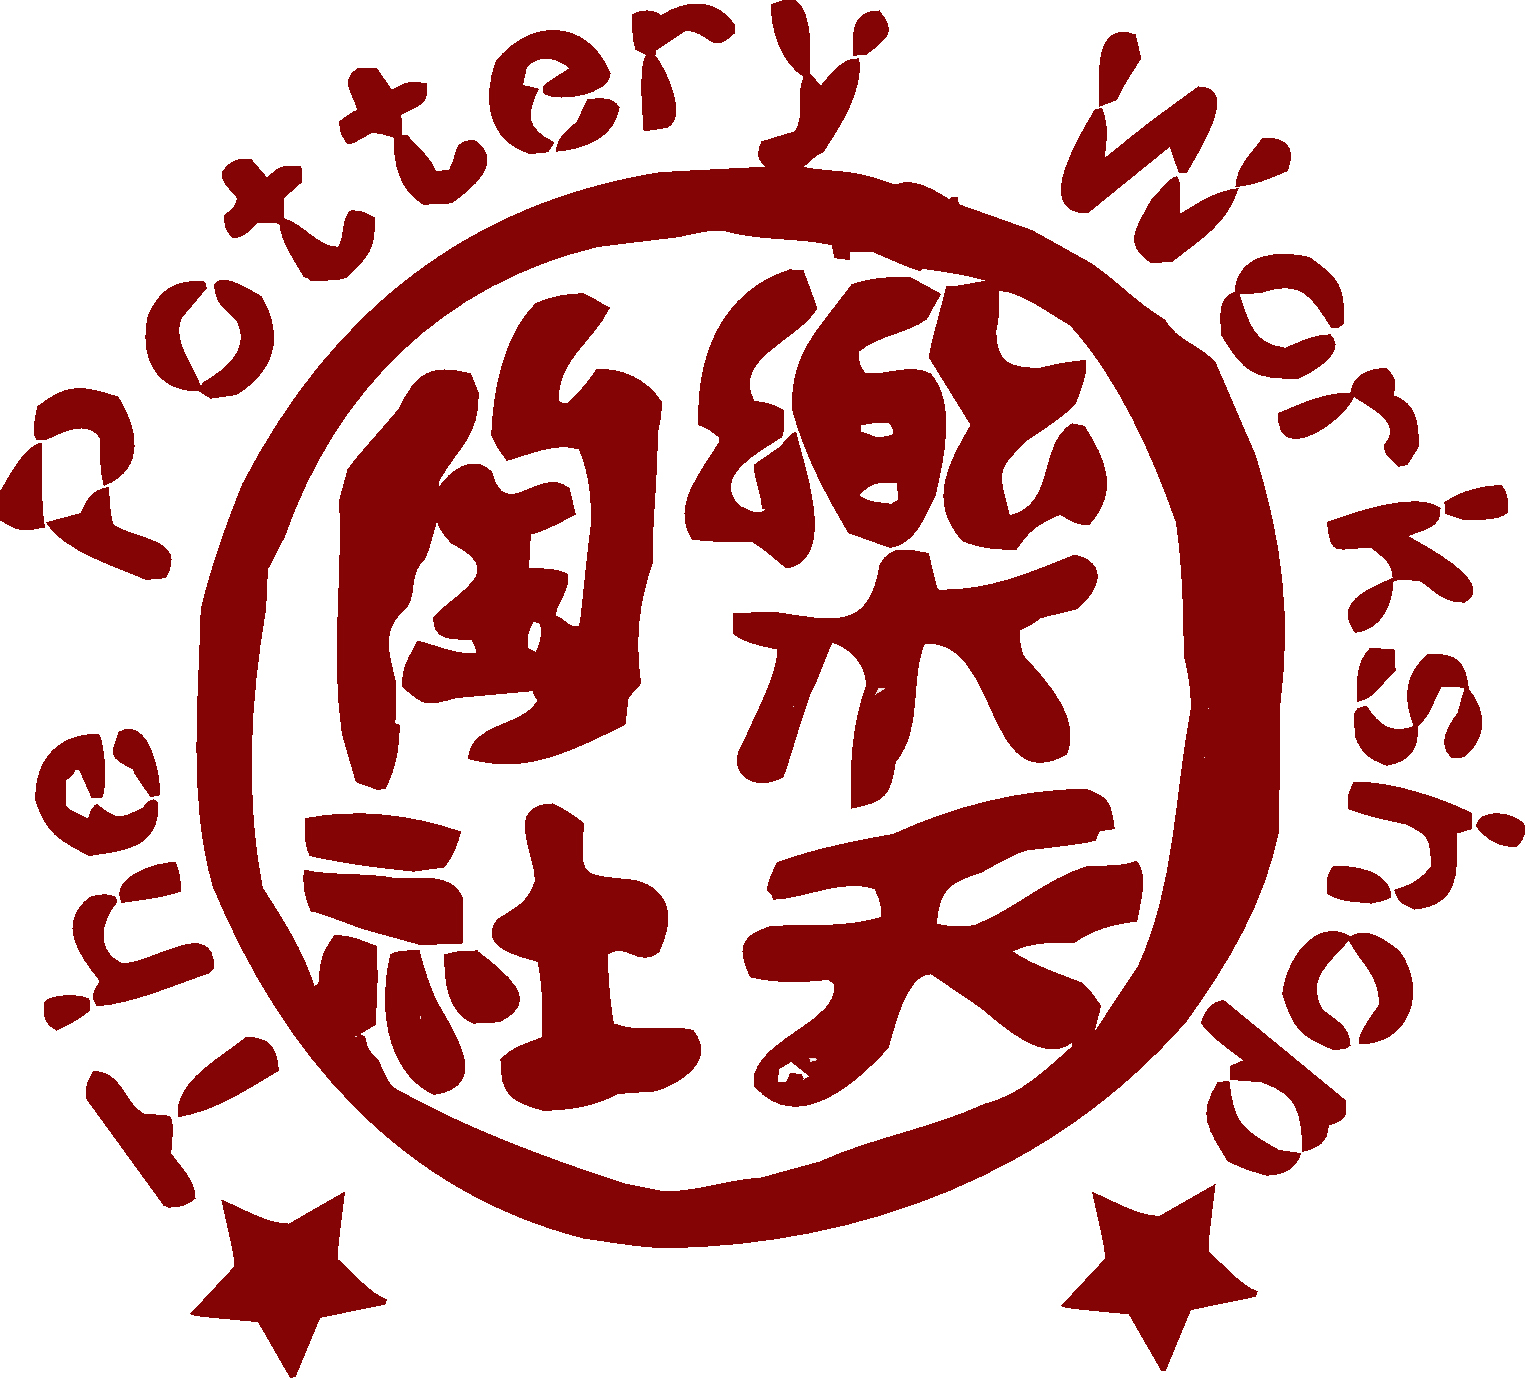 The Pottery Workshop logo